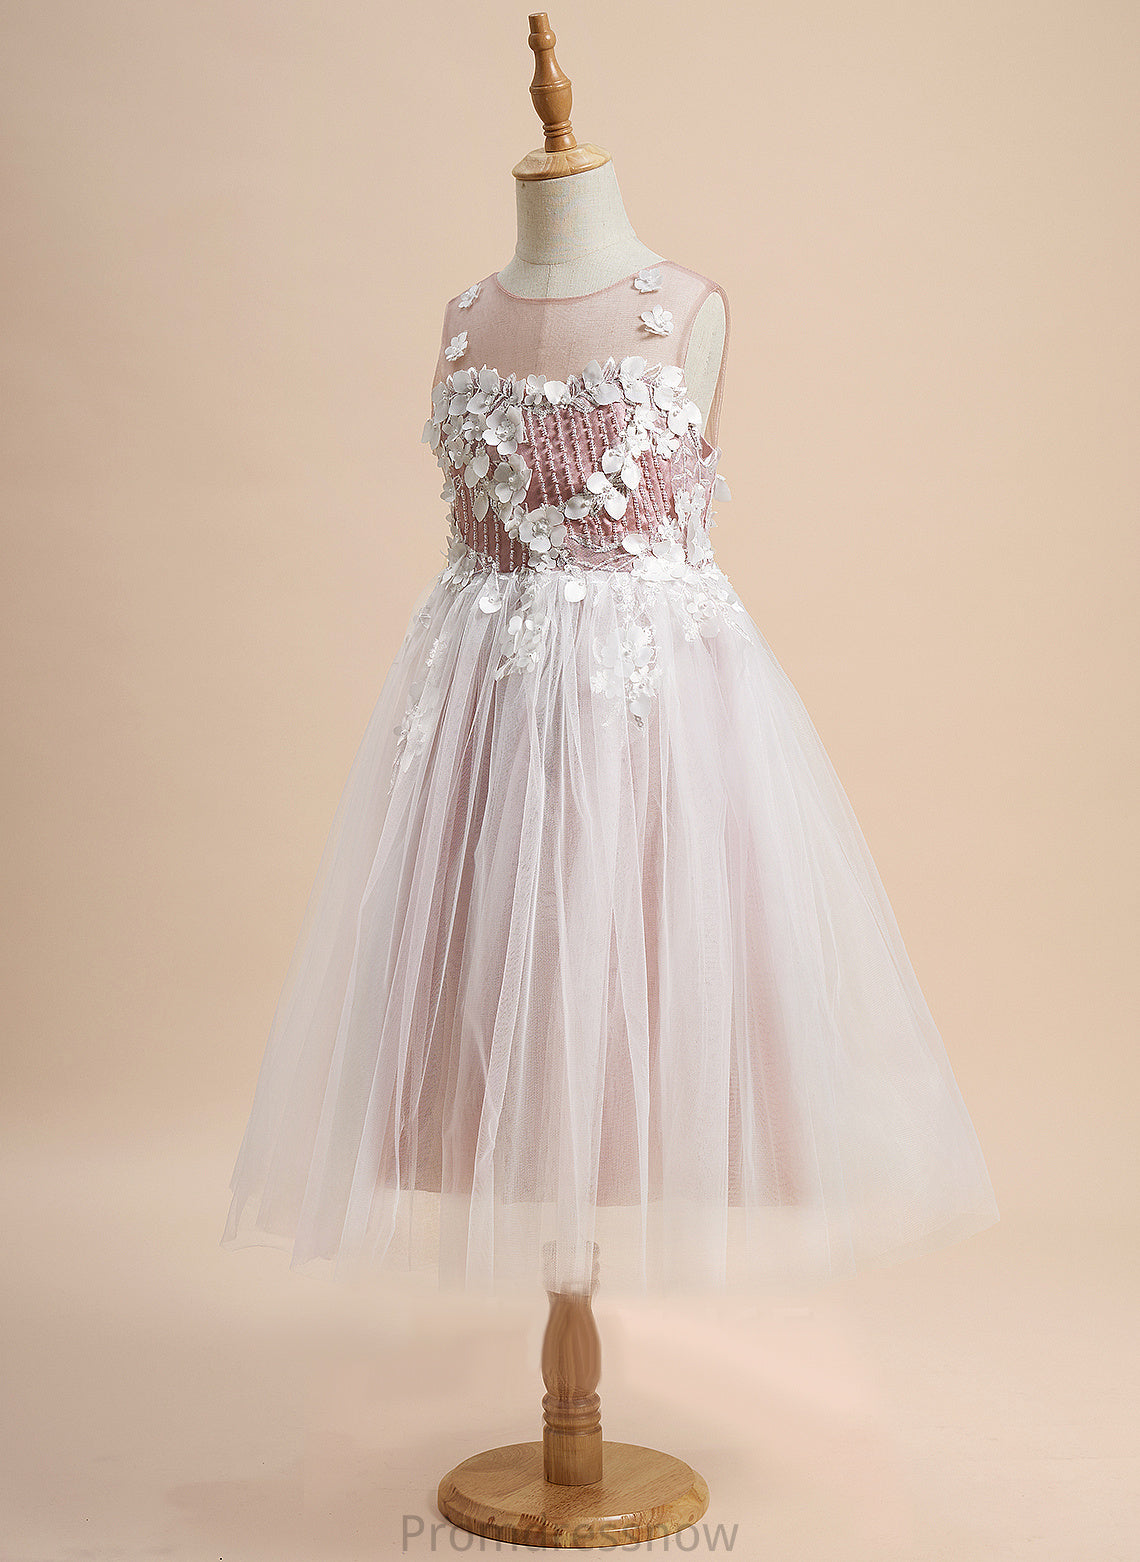 Louise Tulle Neck A-Line Scoop - Tea-length Girl With Flower Girl Dresses Lace/Beading/Flower(s) Sleeveless Dress Flower